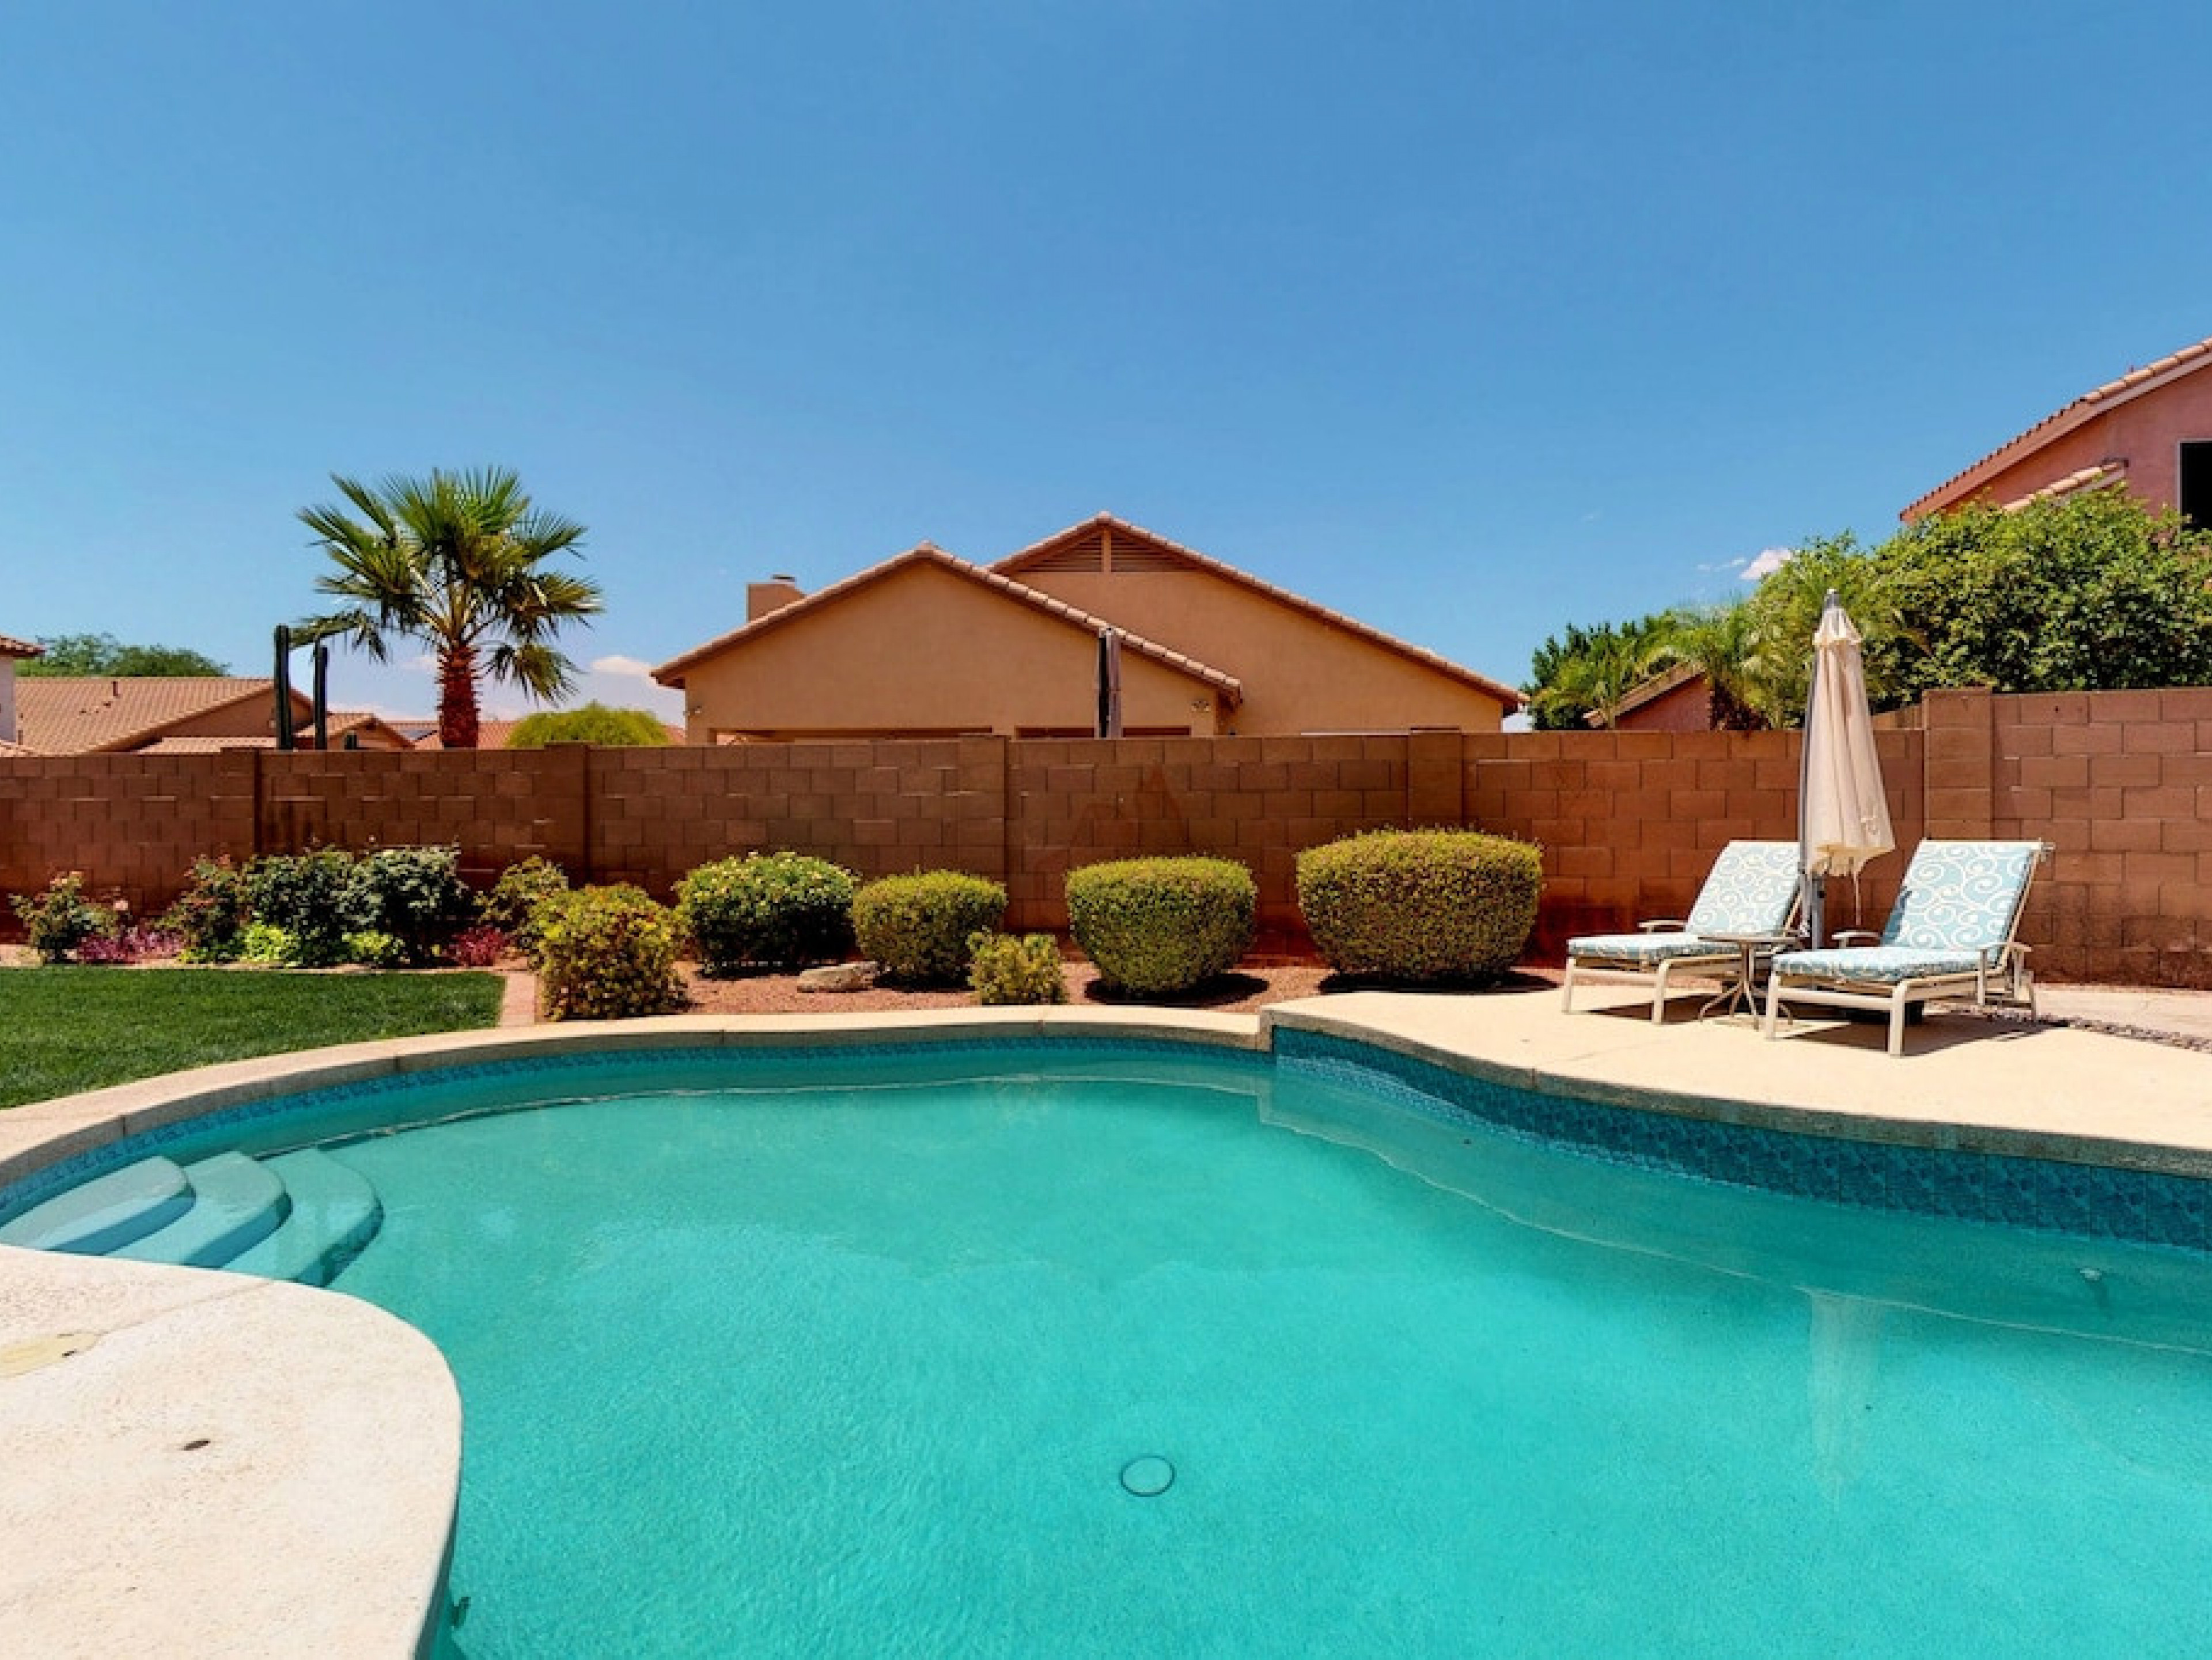 Phoenix 15 - Phoenix vacation rentals with pools  